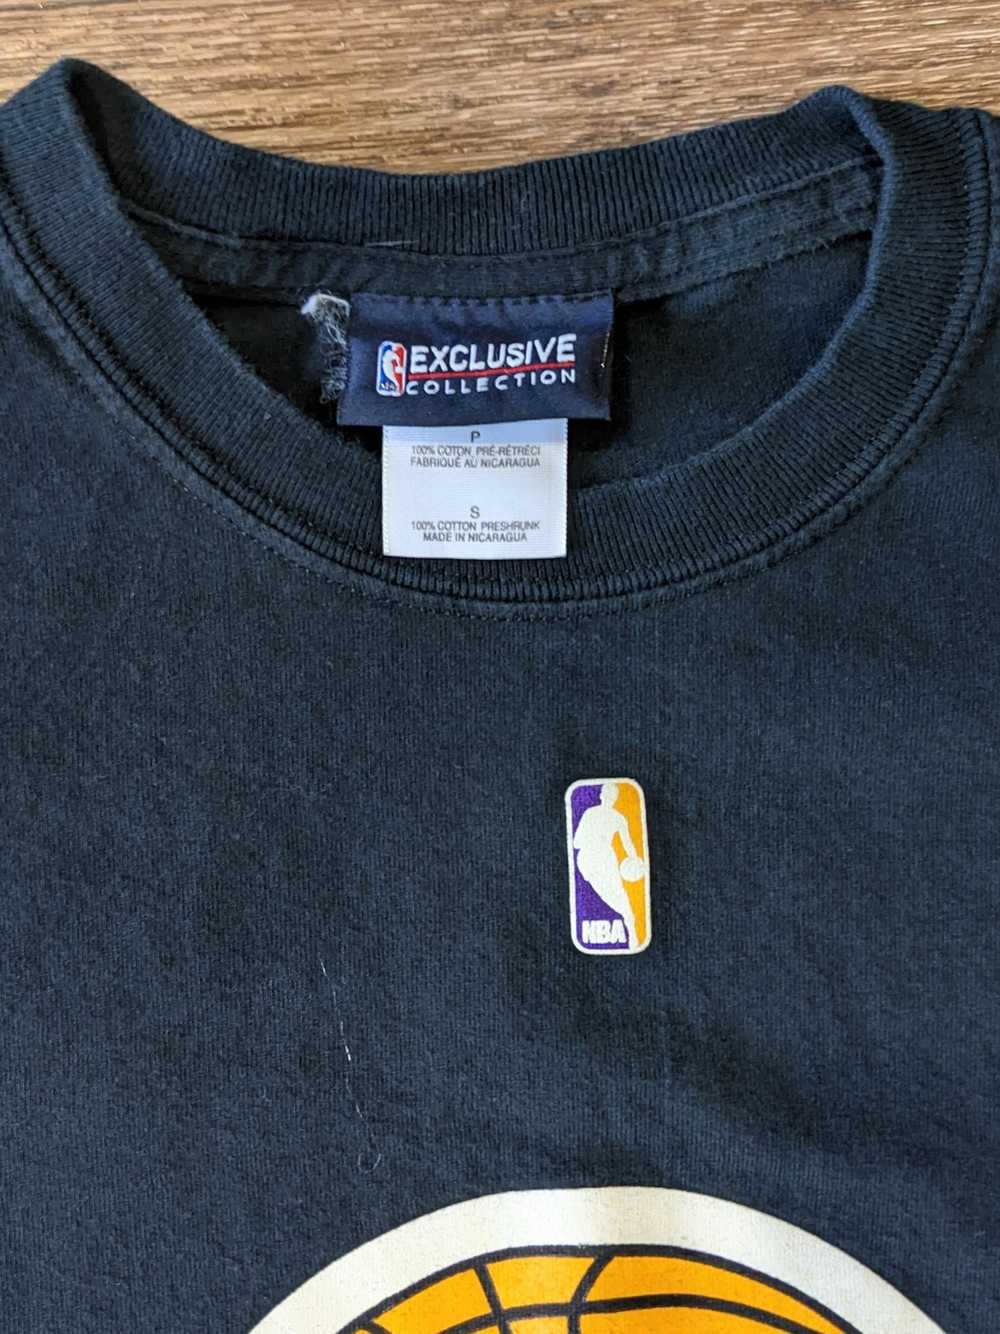 NBA NBA Exclusive Los Angeles Lakers logo t-shirt - image 3